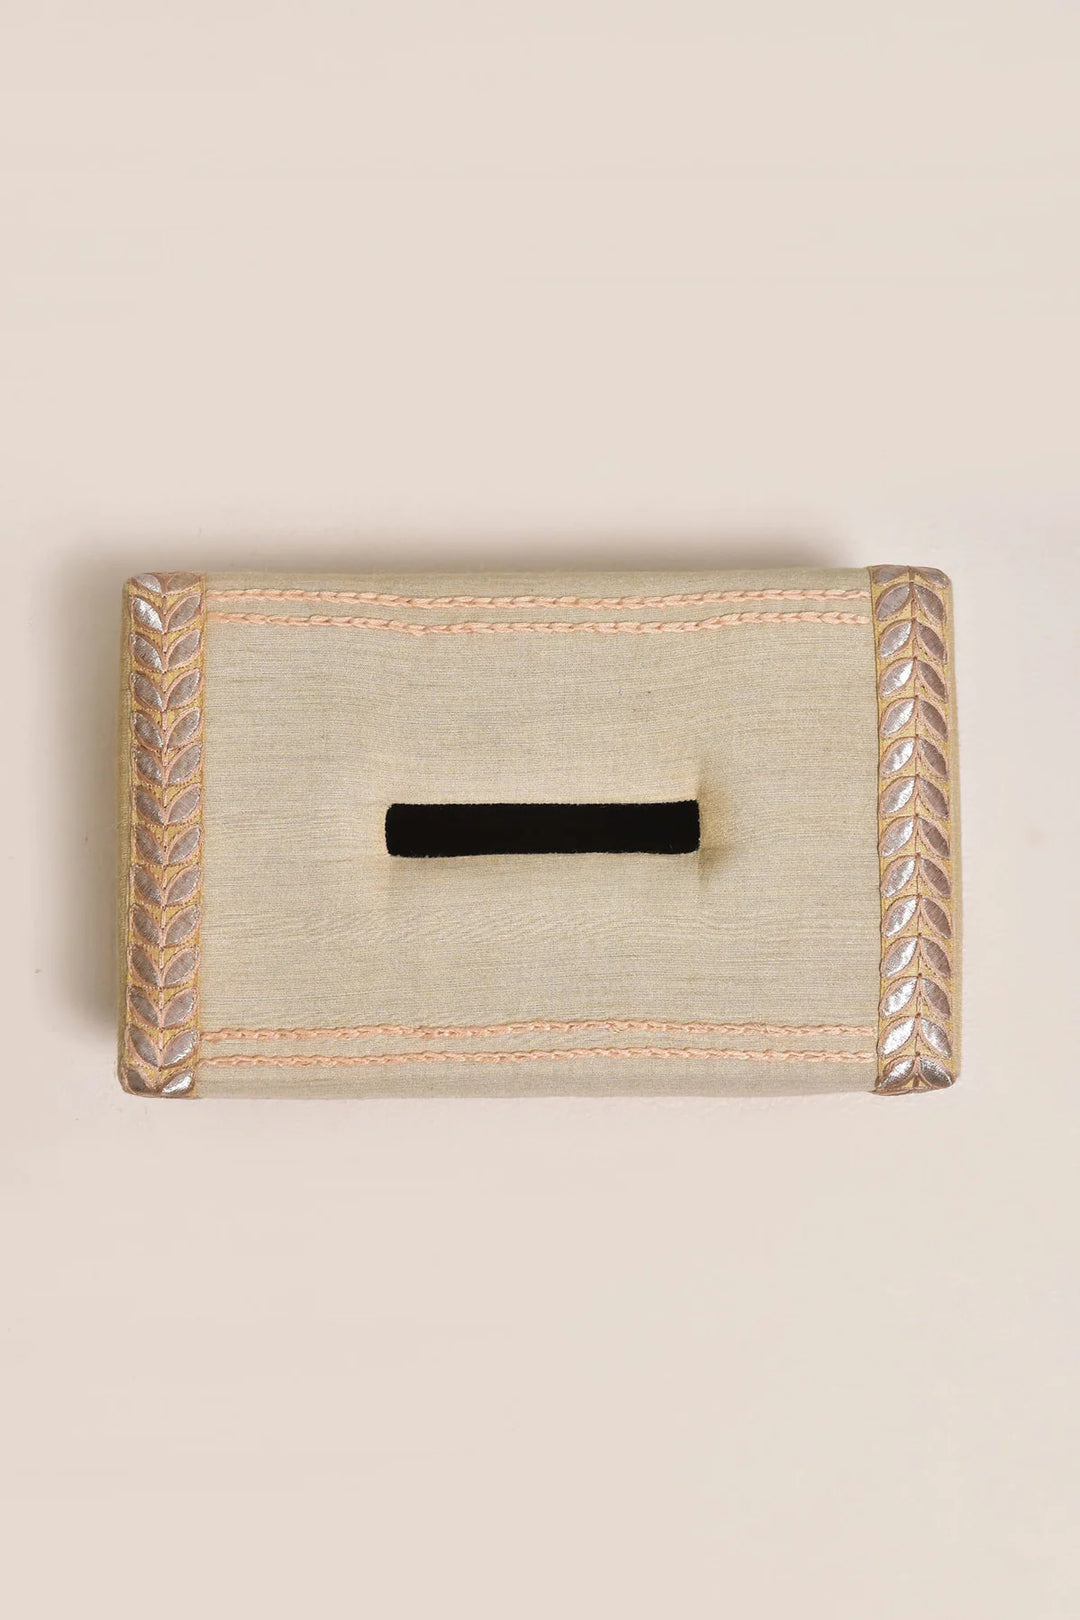 Handwoven Silk Tissue Box with Embroidery | Bronze Handmade Tissue Box - Brown